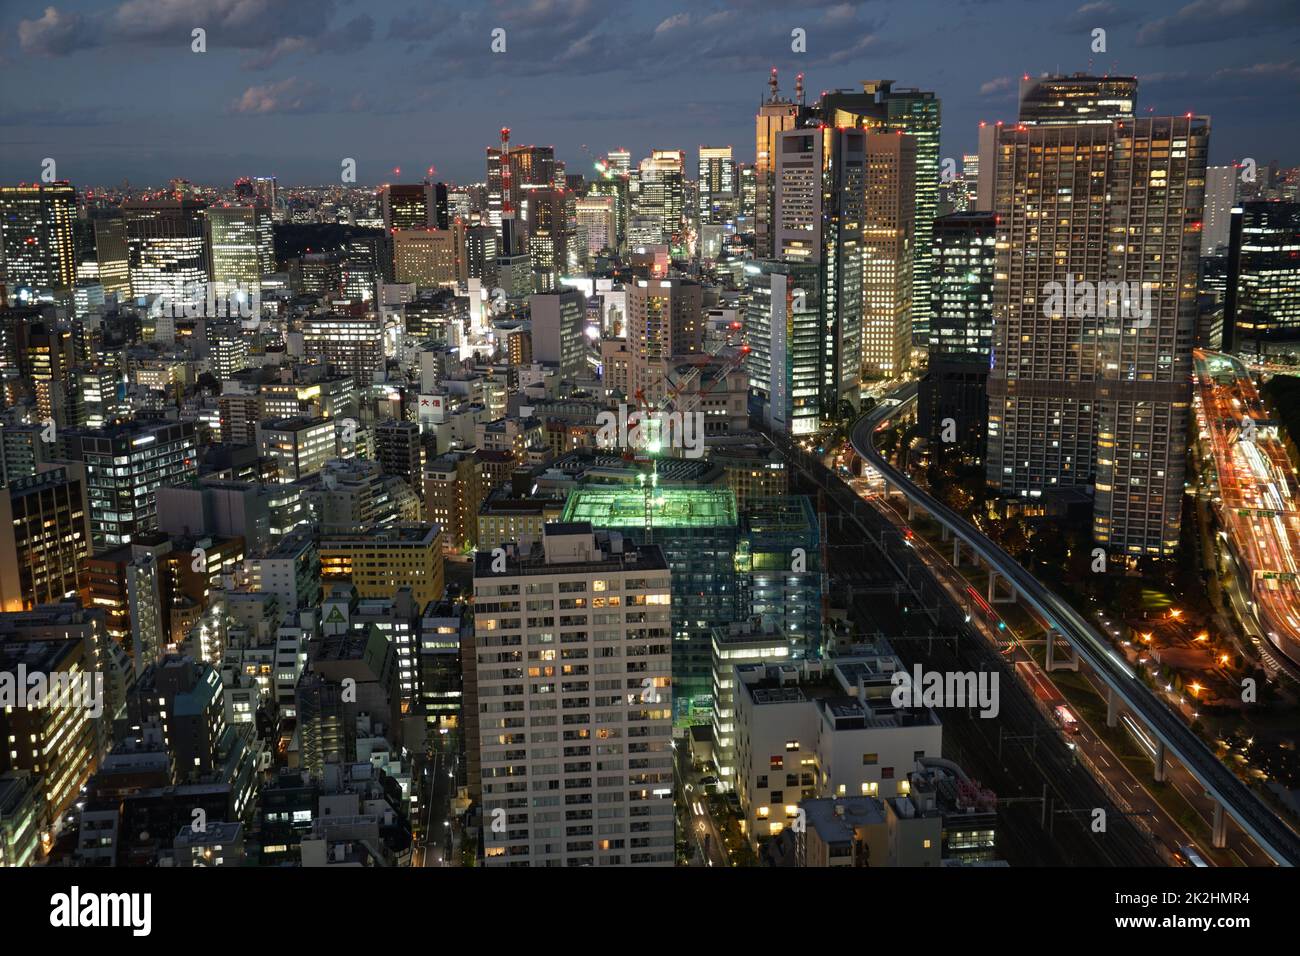 Szenen aus Seaside top (Aussichtsplattform des World Trade Center). Aufnahmeort: Metropolregion Tokio Stockfoto